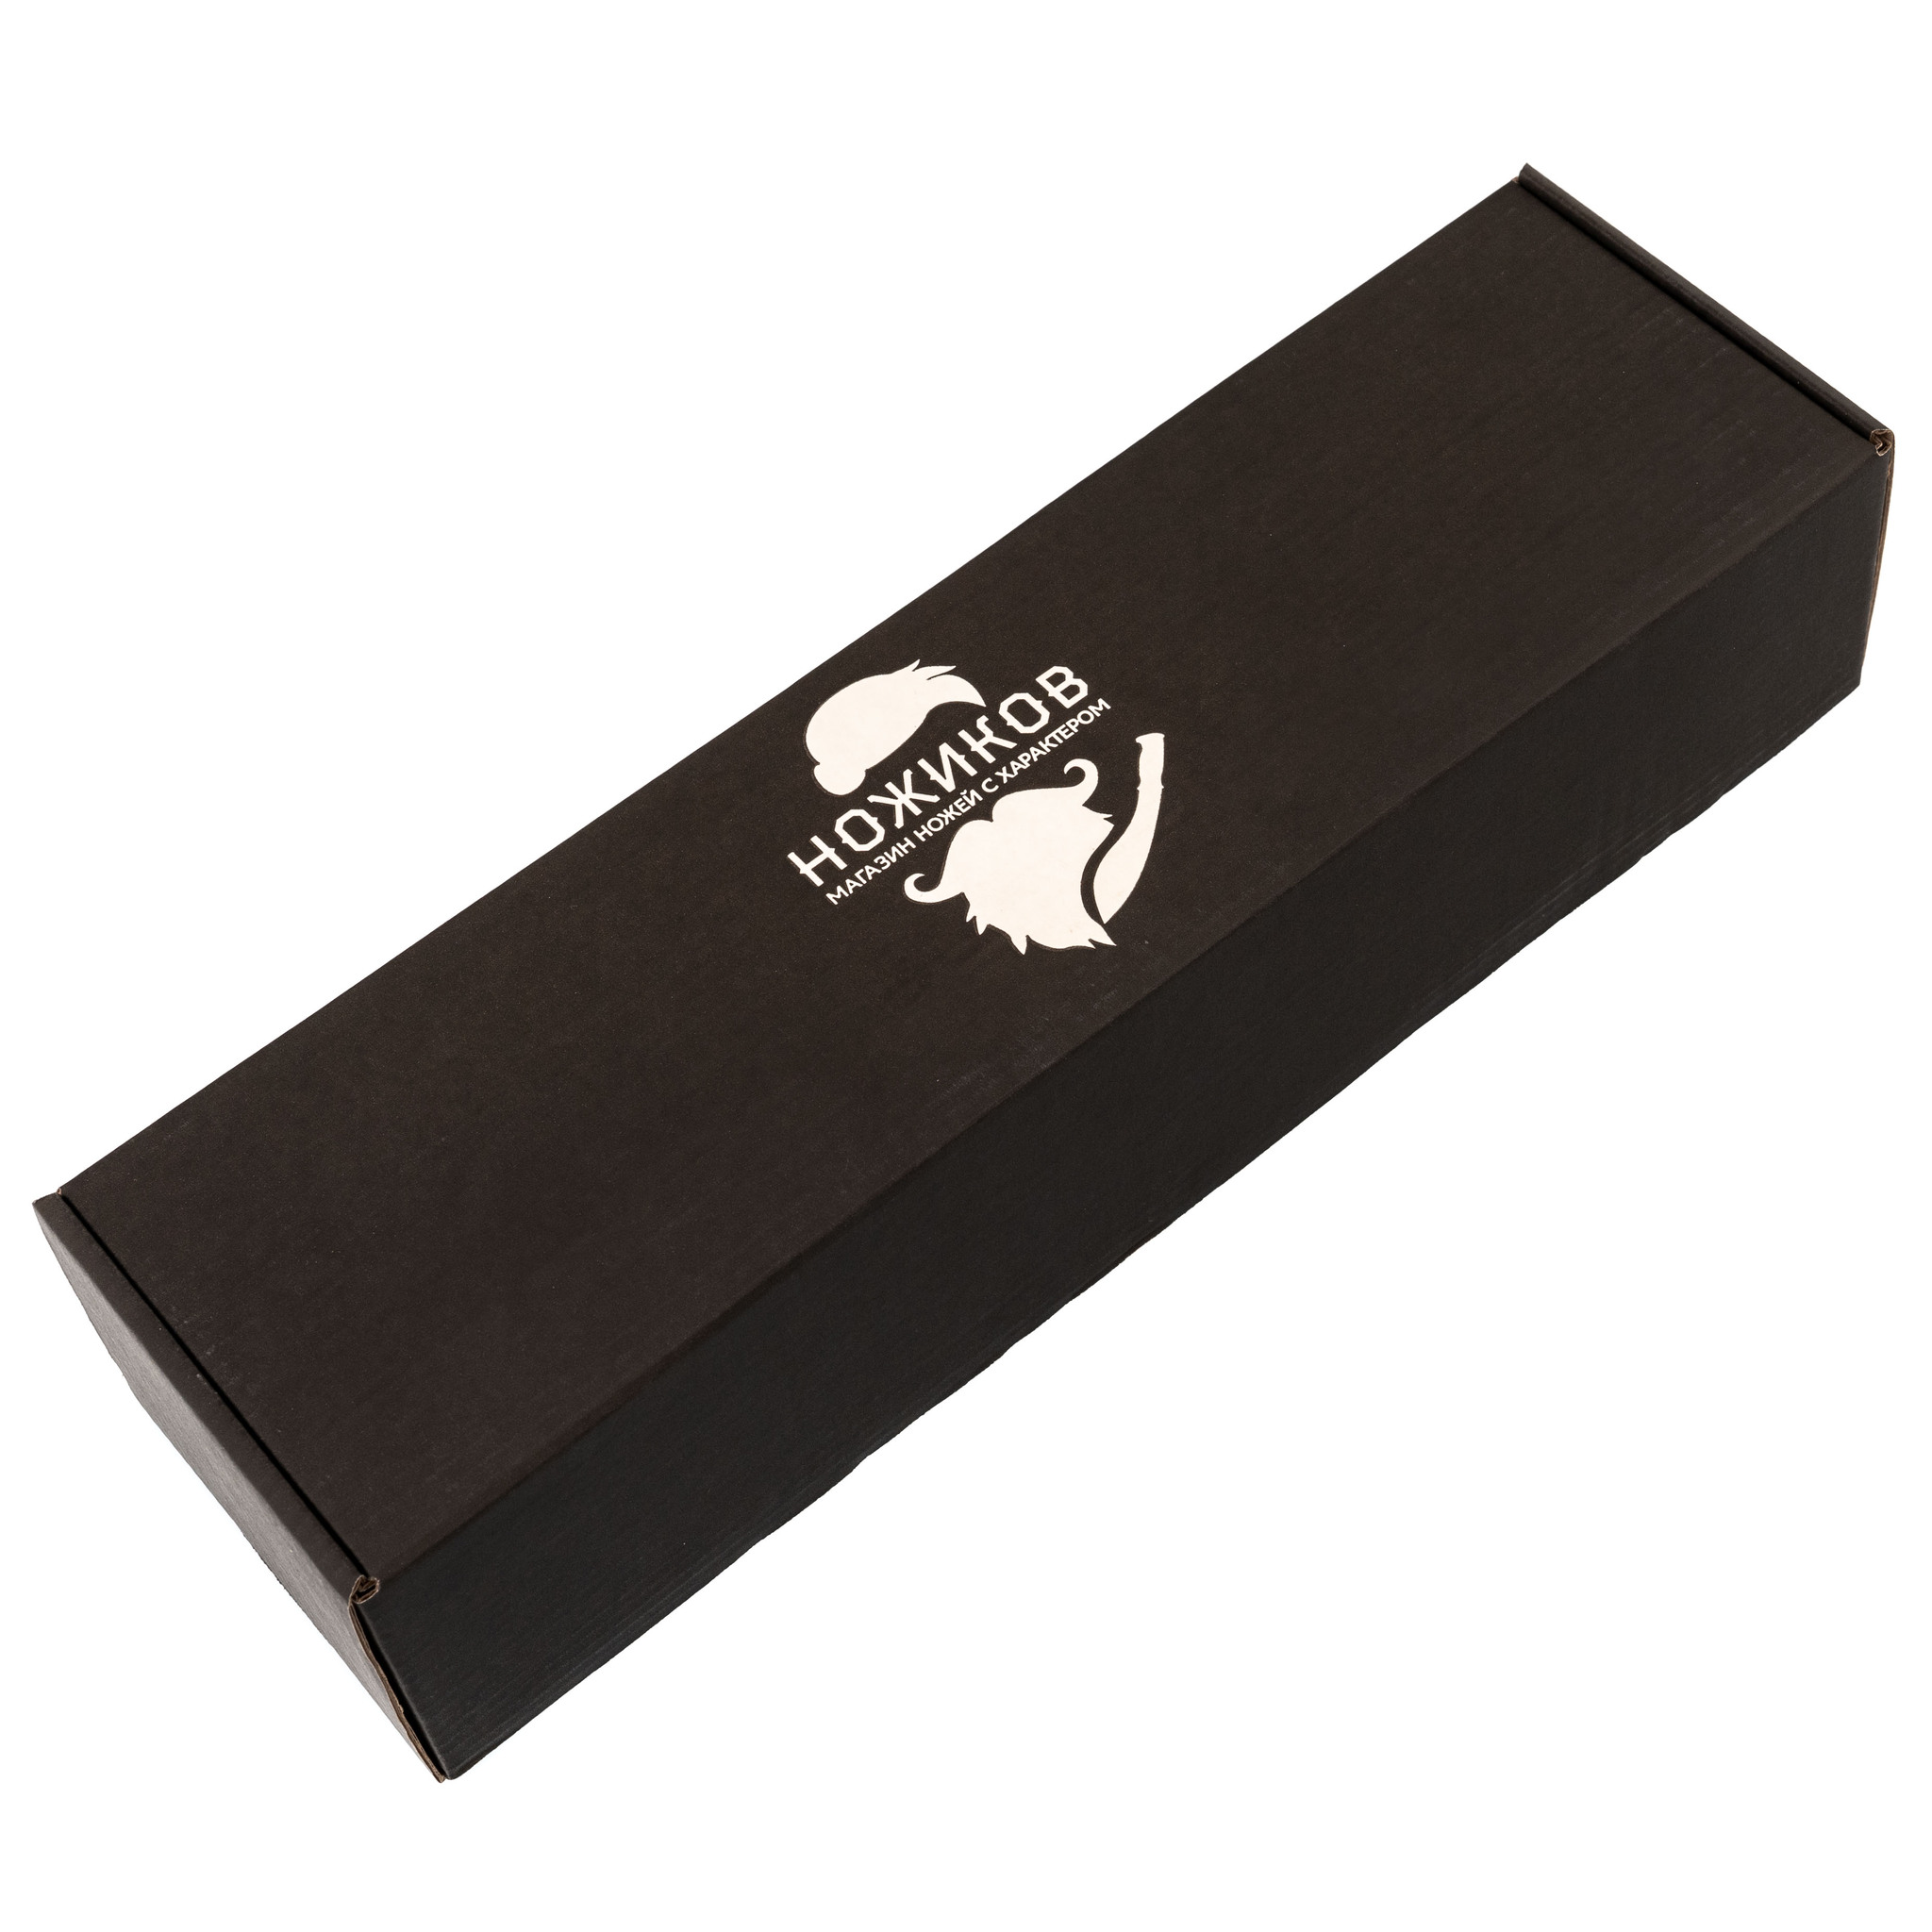 Подарочная коробка Ножиков подарочная коробка для ножей береза